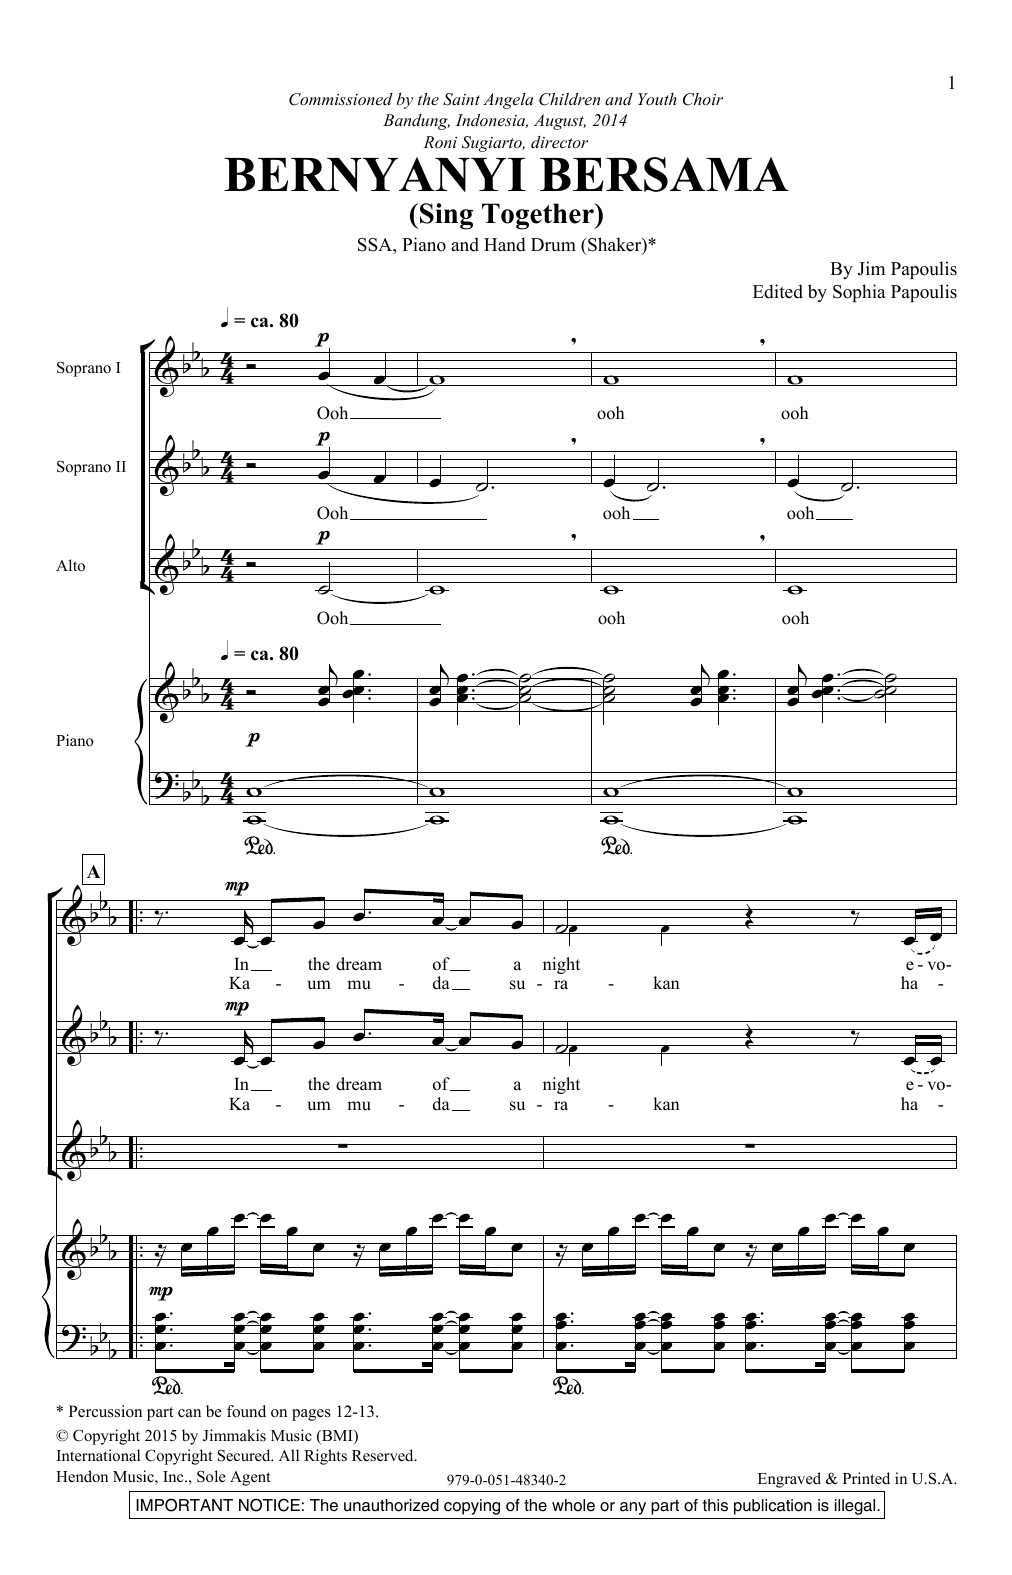 Jim Papoulis Bernyanyi Bersama sheet music notes and chords arranged for SSA Choir